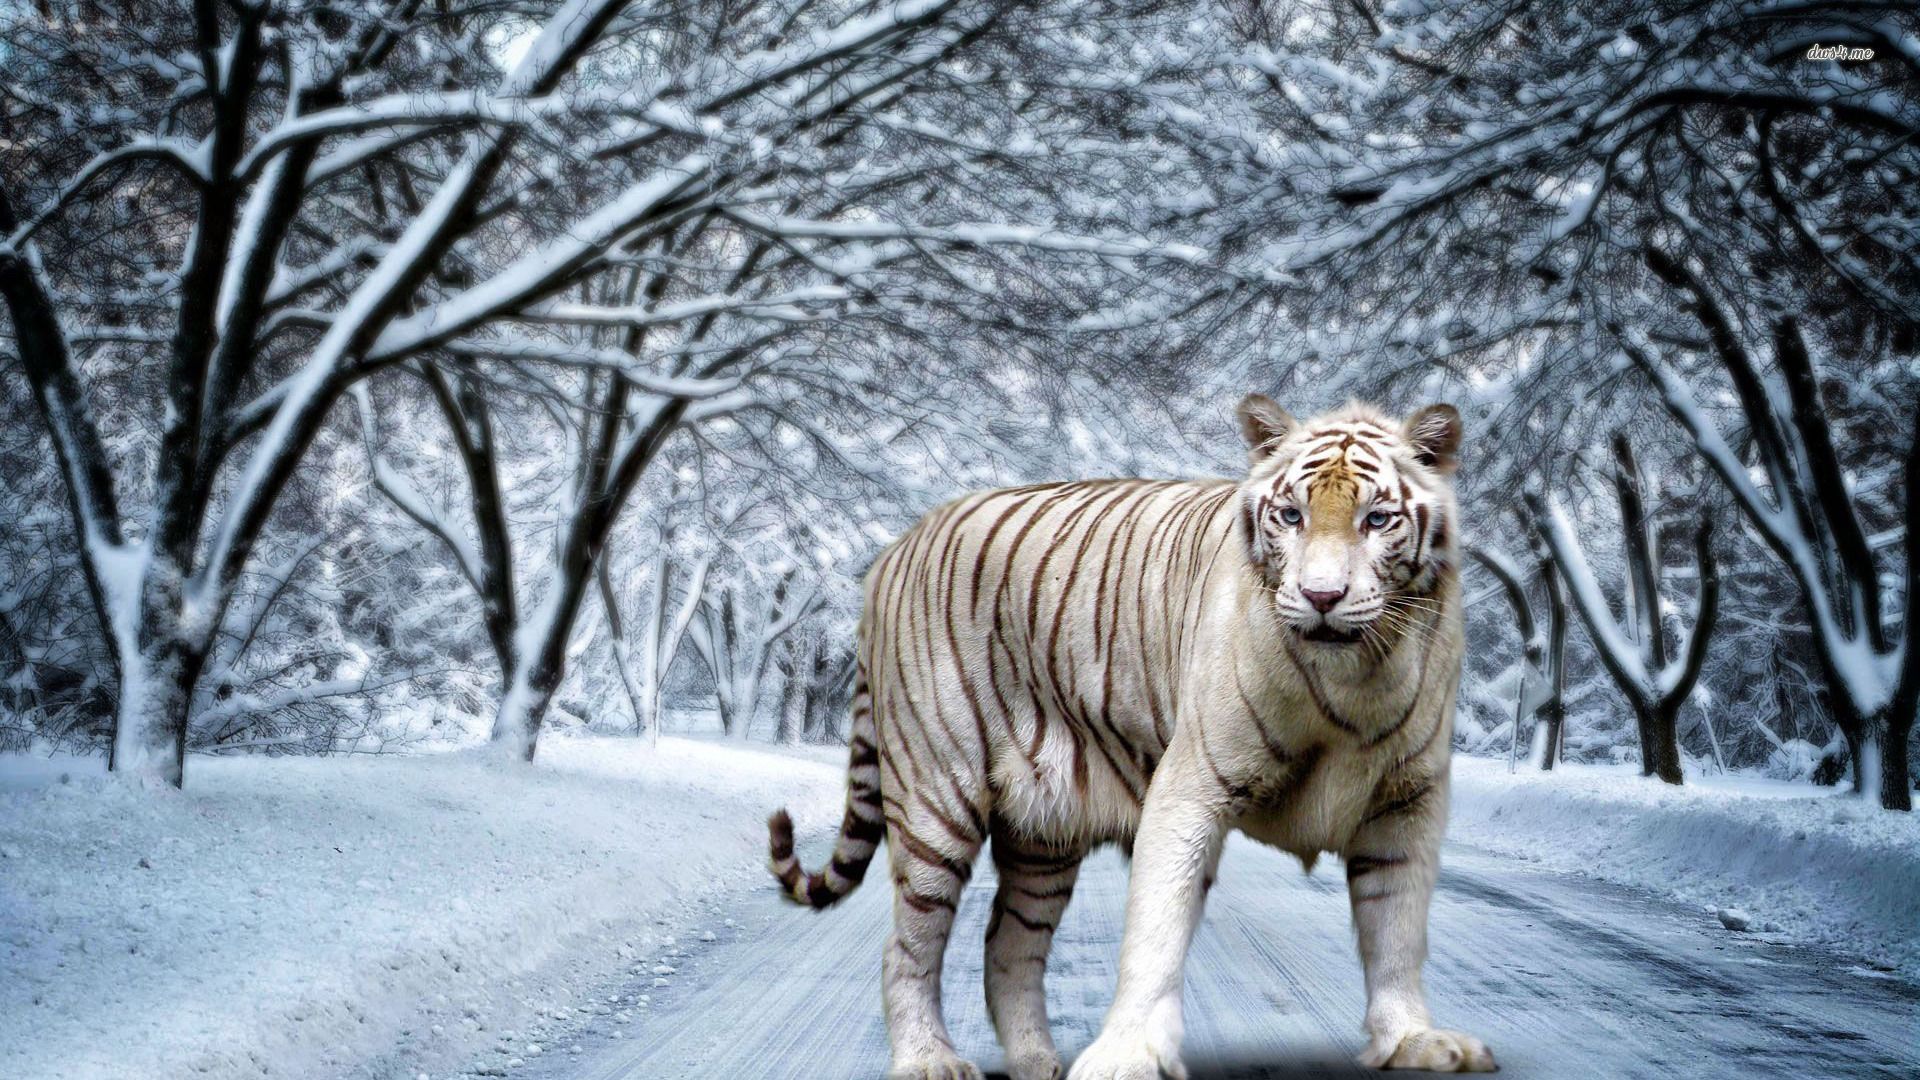 White tiger wallpaper - Digital Art wallpapers -